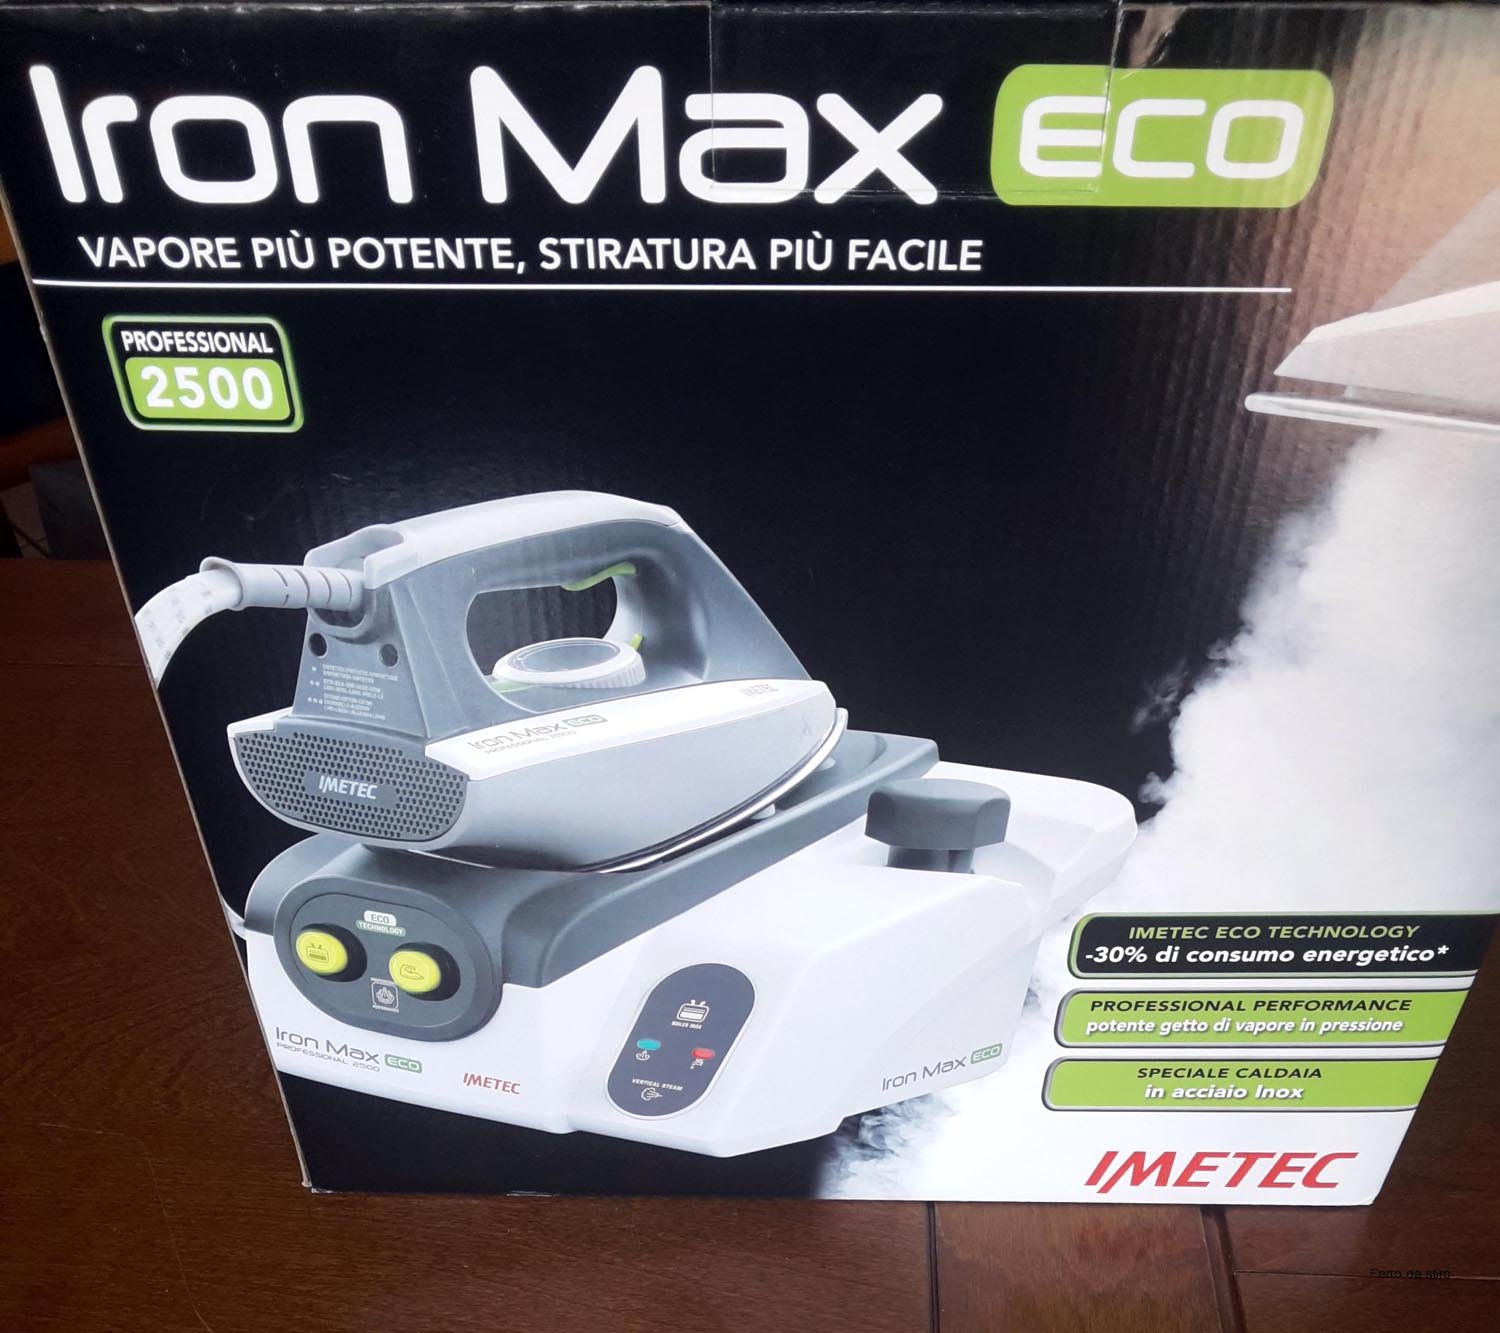 саркома припомняне Мартин Лутър Кинг Джуниър Imetec Iron Max Eco Professional 2500 | Opinioni e Prezzi | Acquistalo  online!